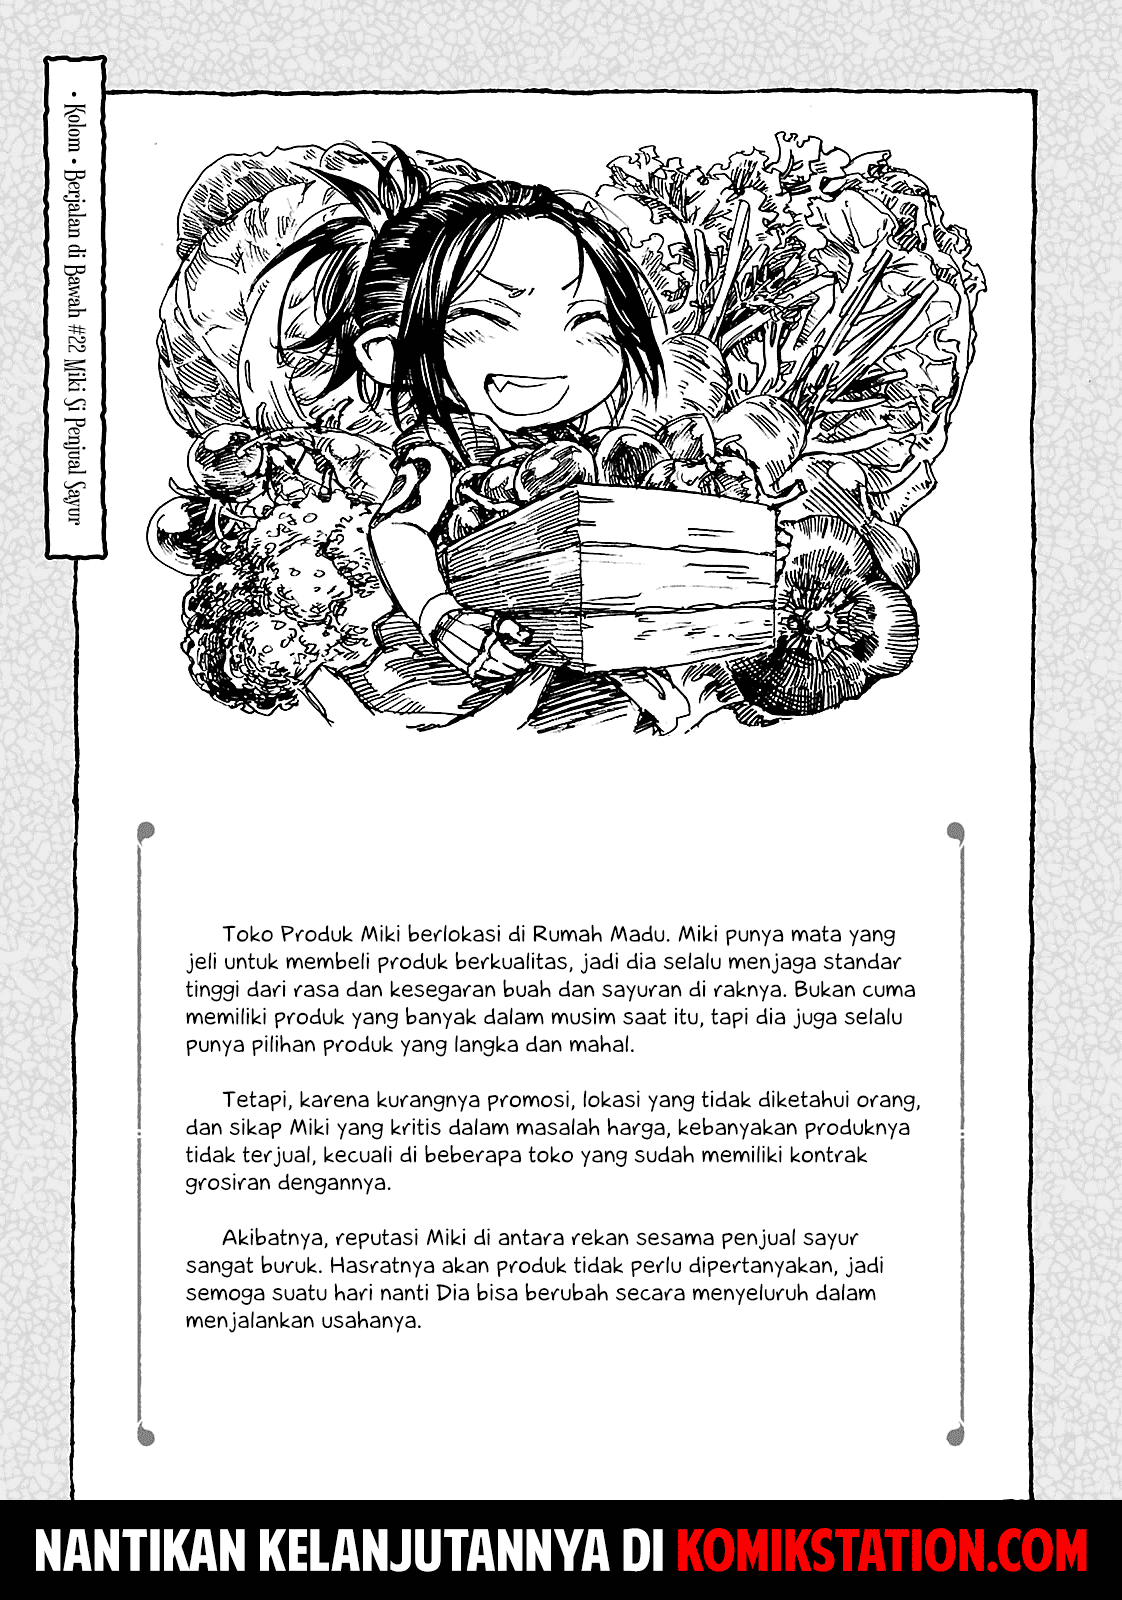 Hakumei to Mikochi Chapter 22